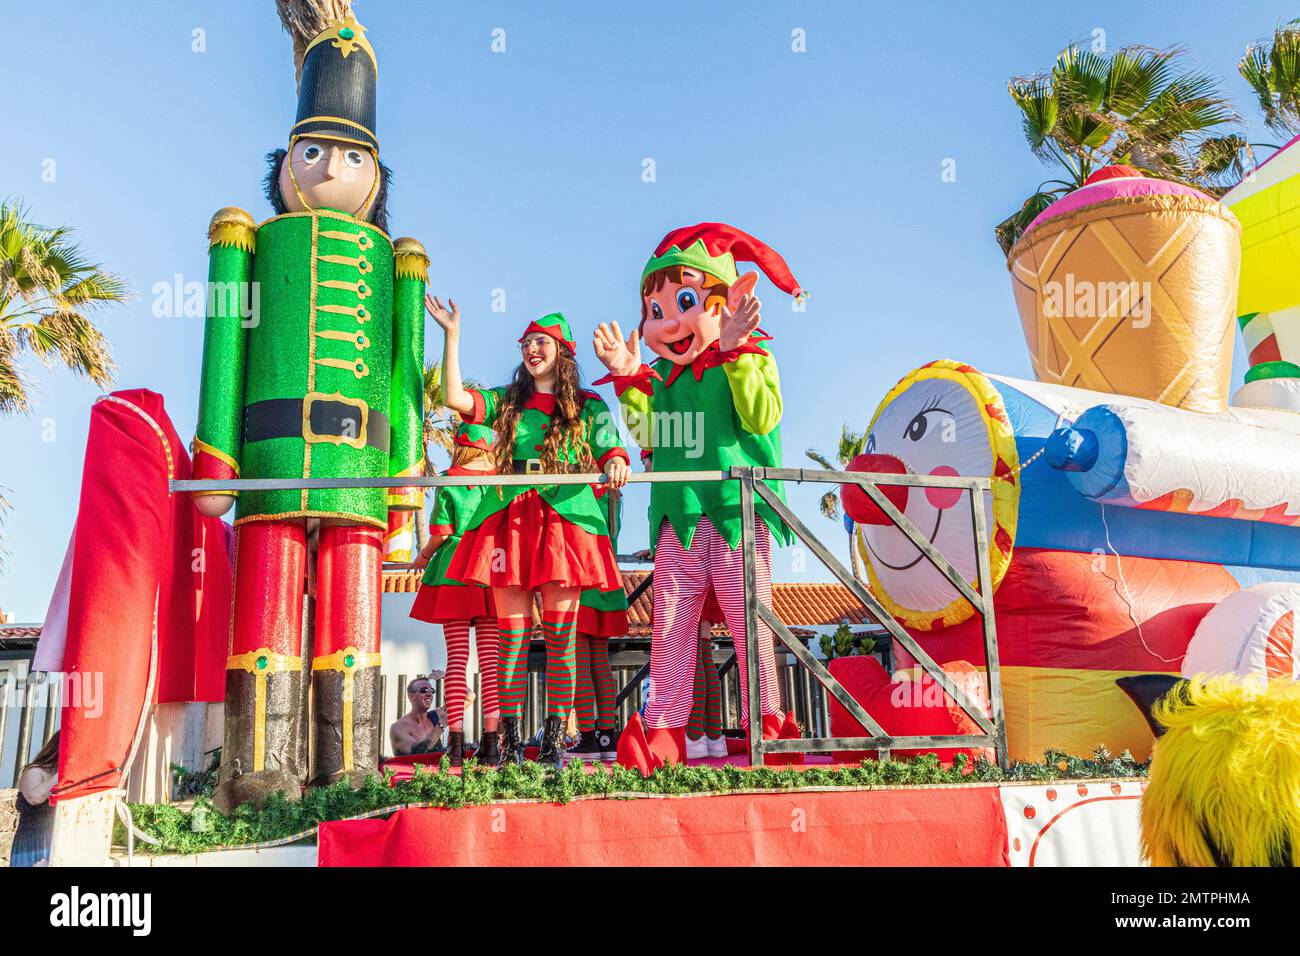 One of the floats in the traditional Spanish Three Kings Parade (Cabalgata de los Reyes Magos) on 5th January at Caleta de Fuste, Fuerteventura. Stock Photo